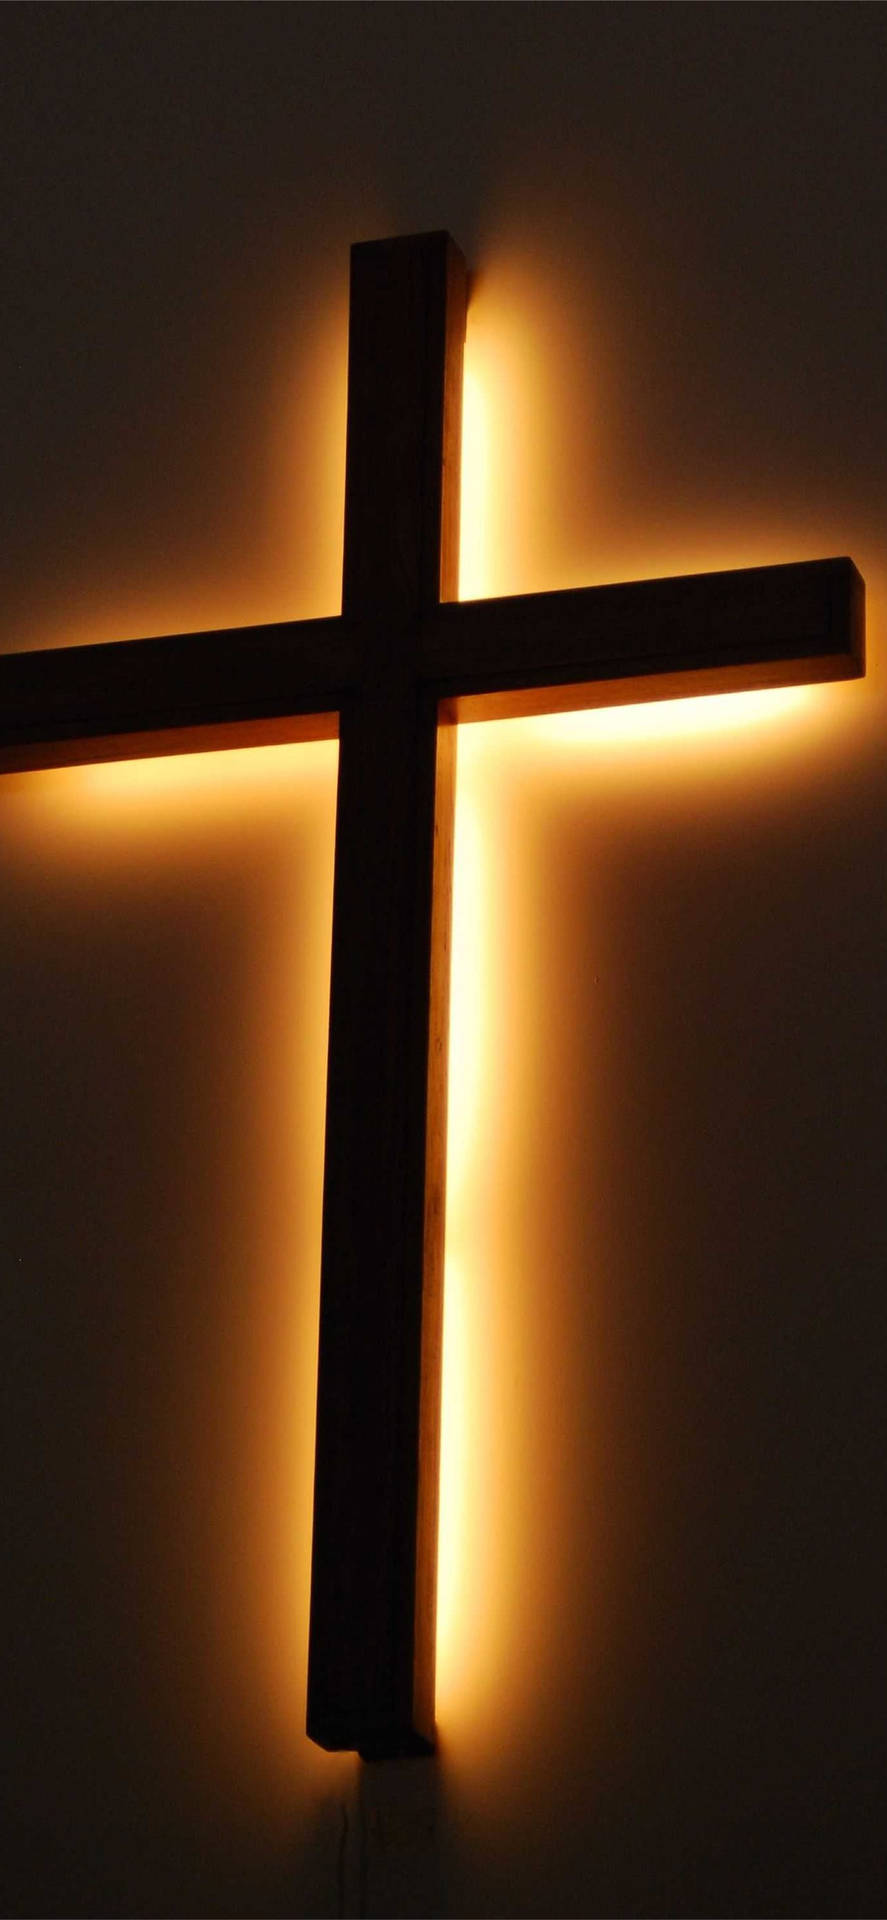 Christian Cross In Warm Light Background